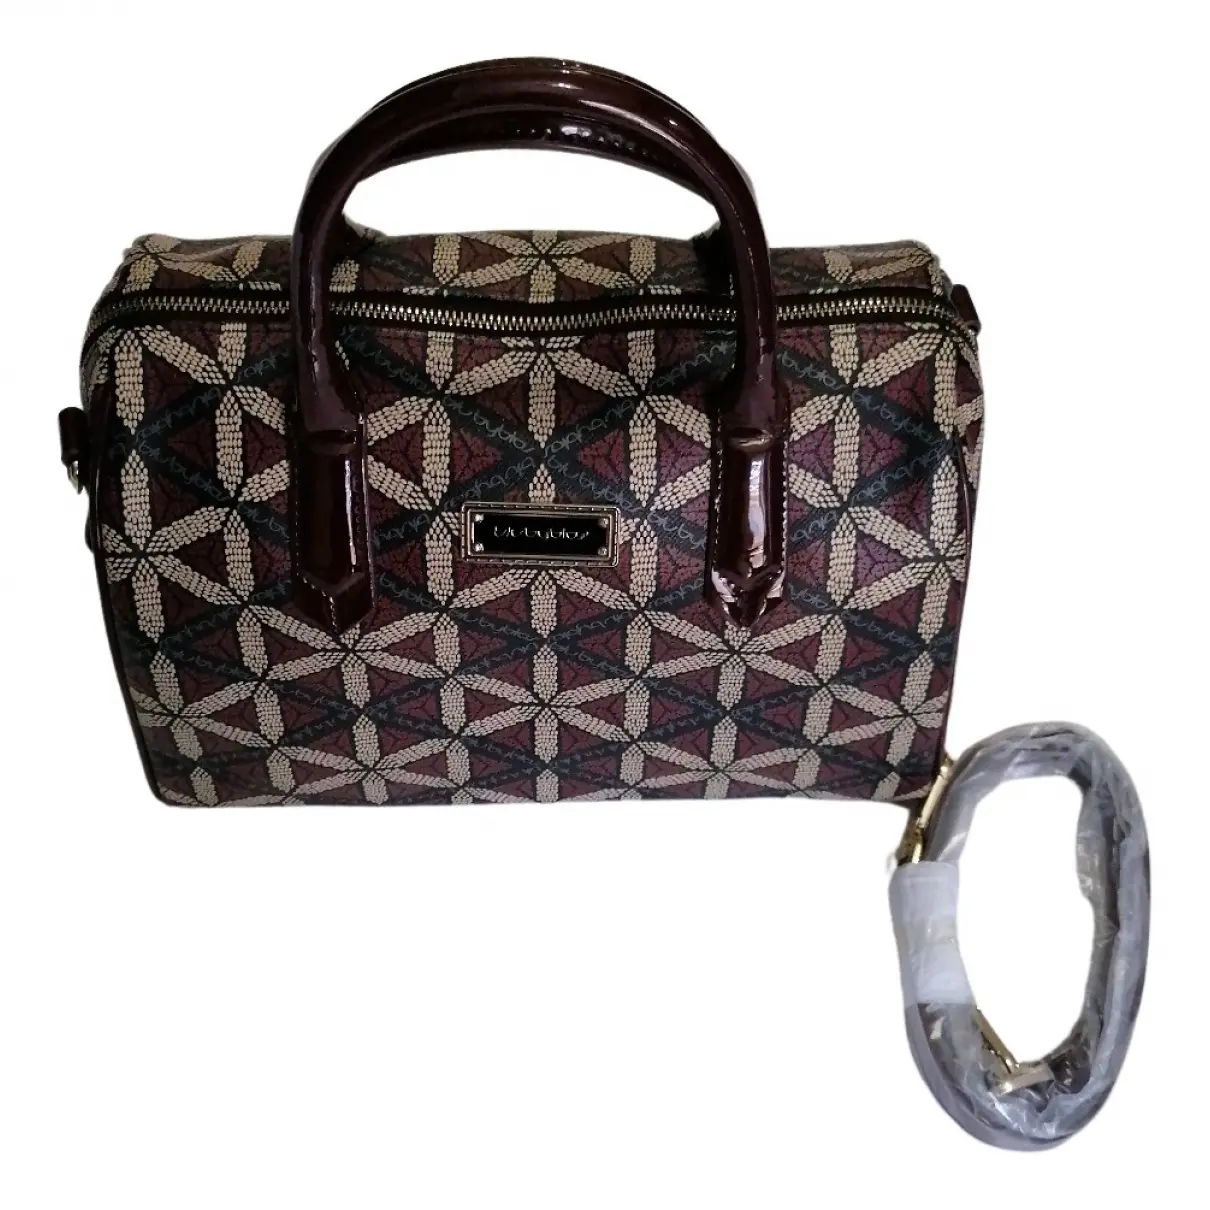 Leather handbag Byblos